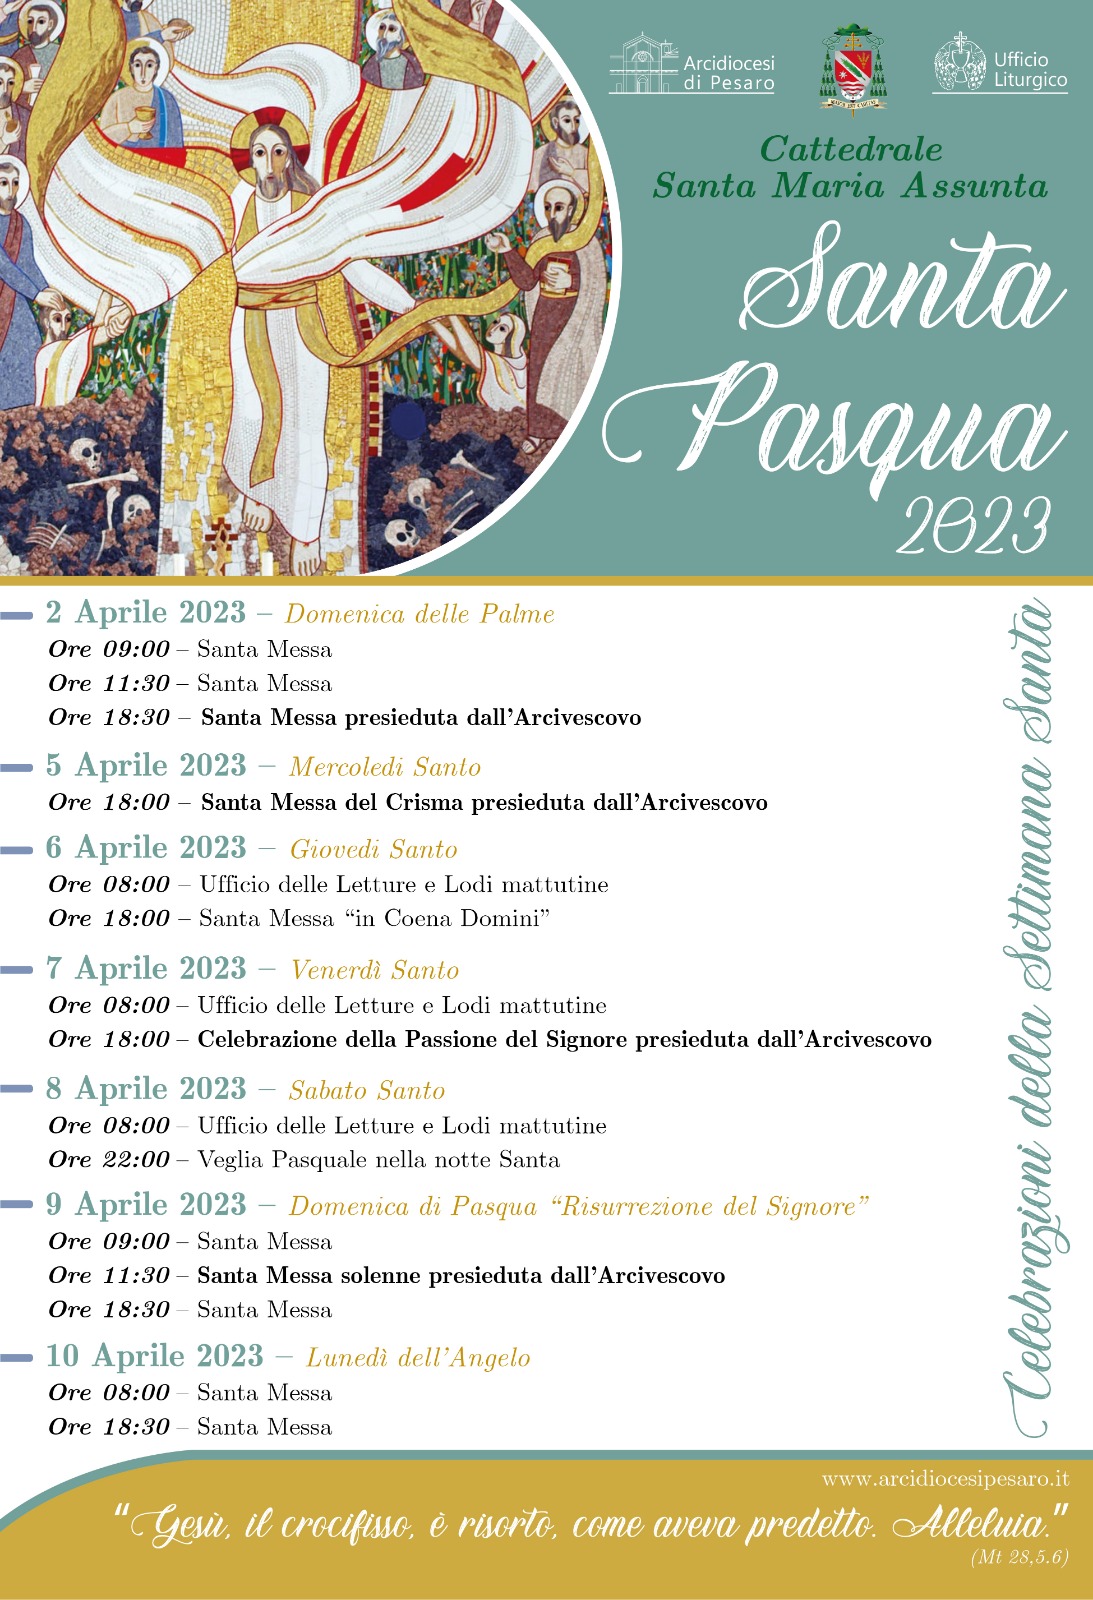 SANTA PASQUA 2023 – Celebrazioni nella Cattedrale di Santa Maria Assunta in Pesaro